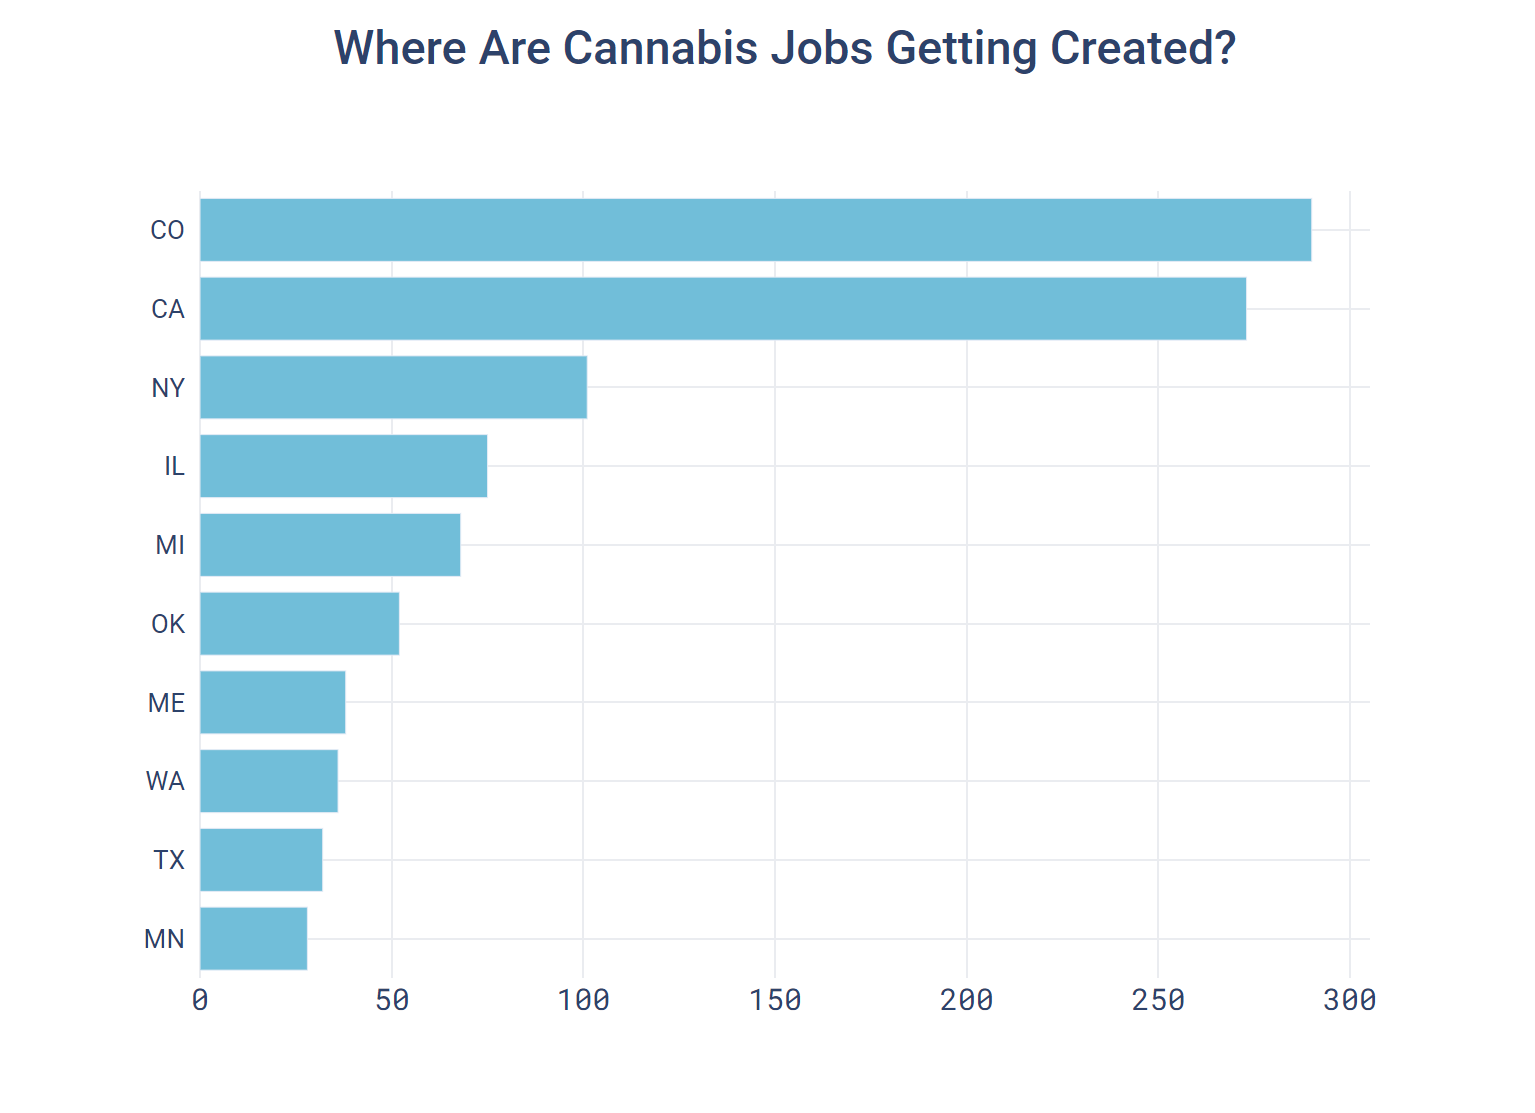 Where are cannabis jobs getting created